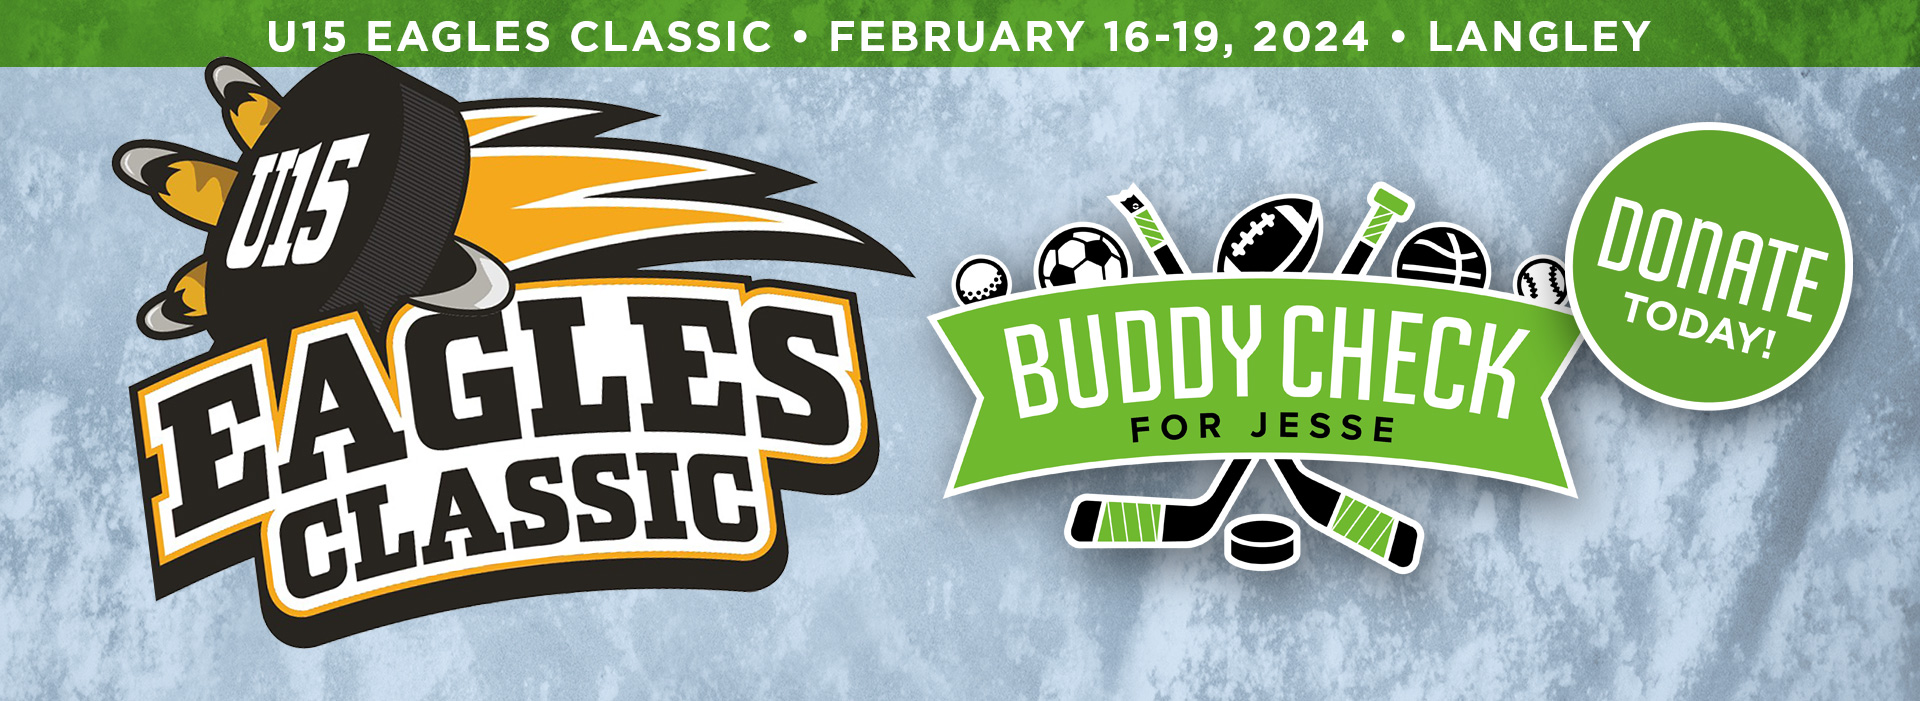 U15 Eagles Classic - February 16-19